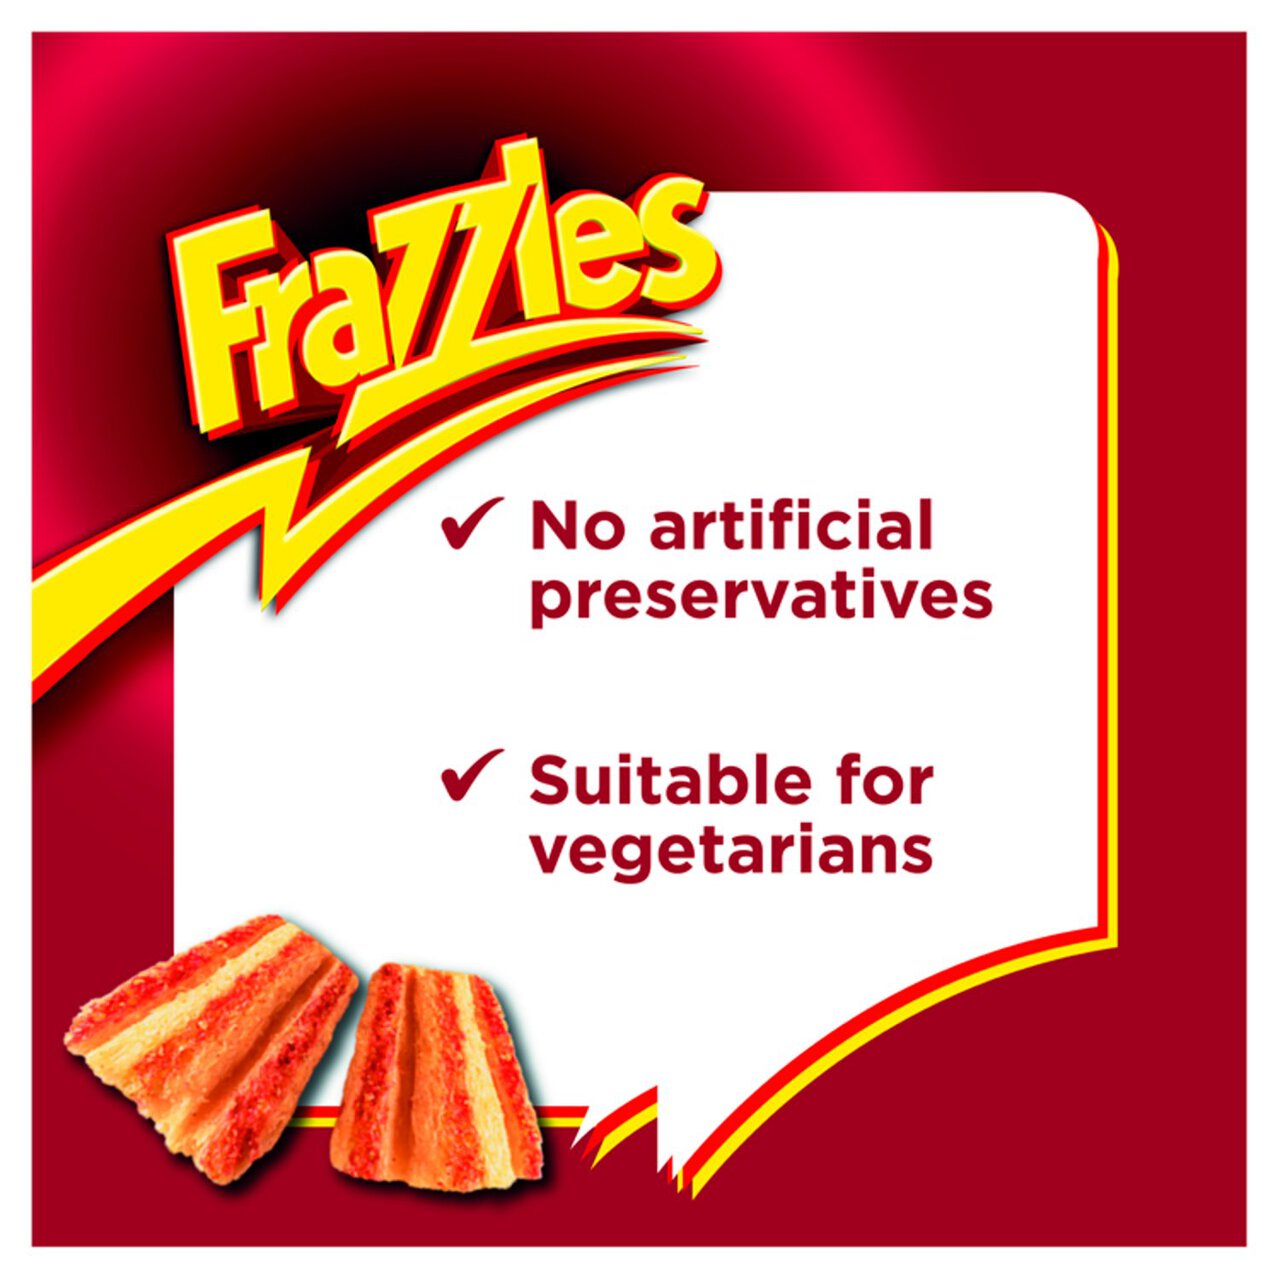 Smiths Frazzles Crispy Bacon Multipack Snacks 6 per pack